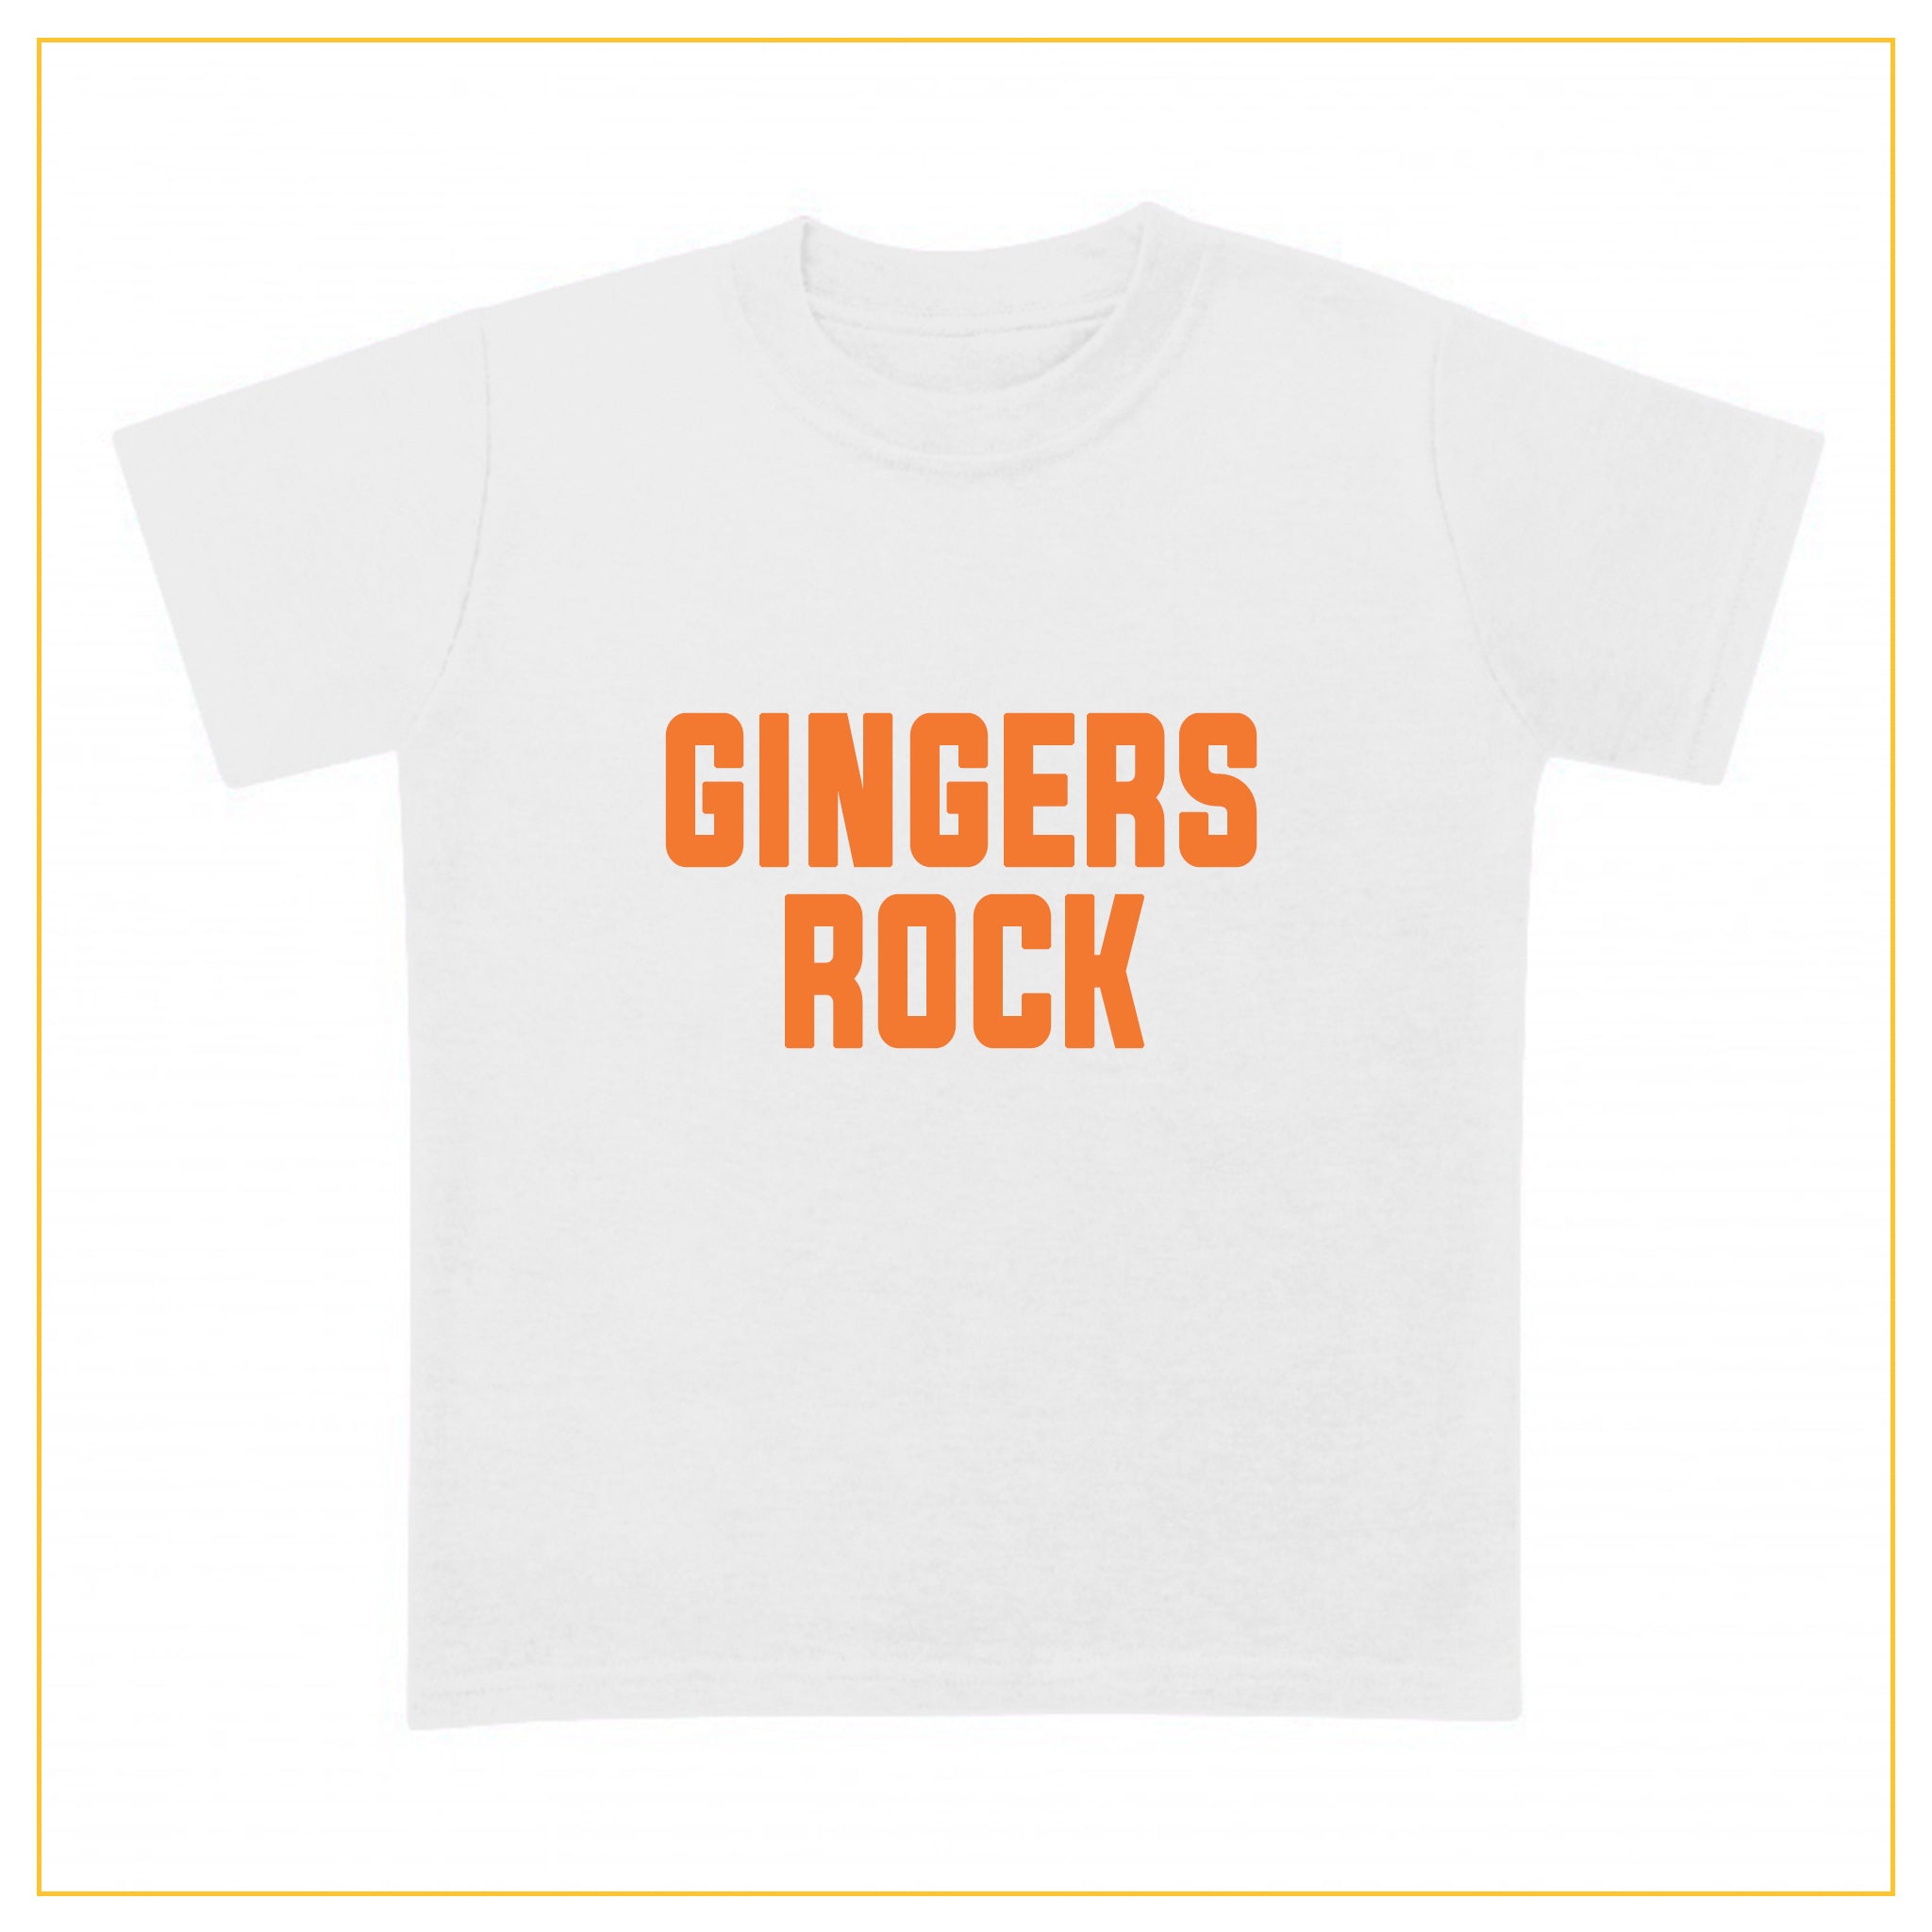 gingers rock kids novelty t-shirt in white